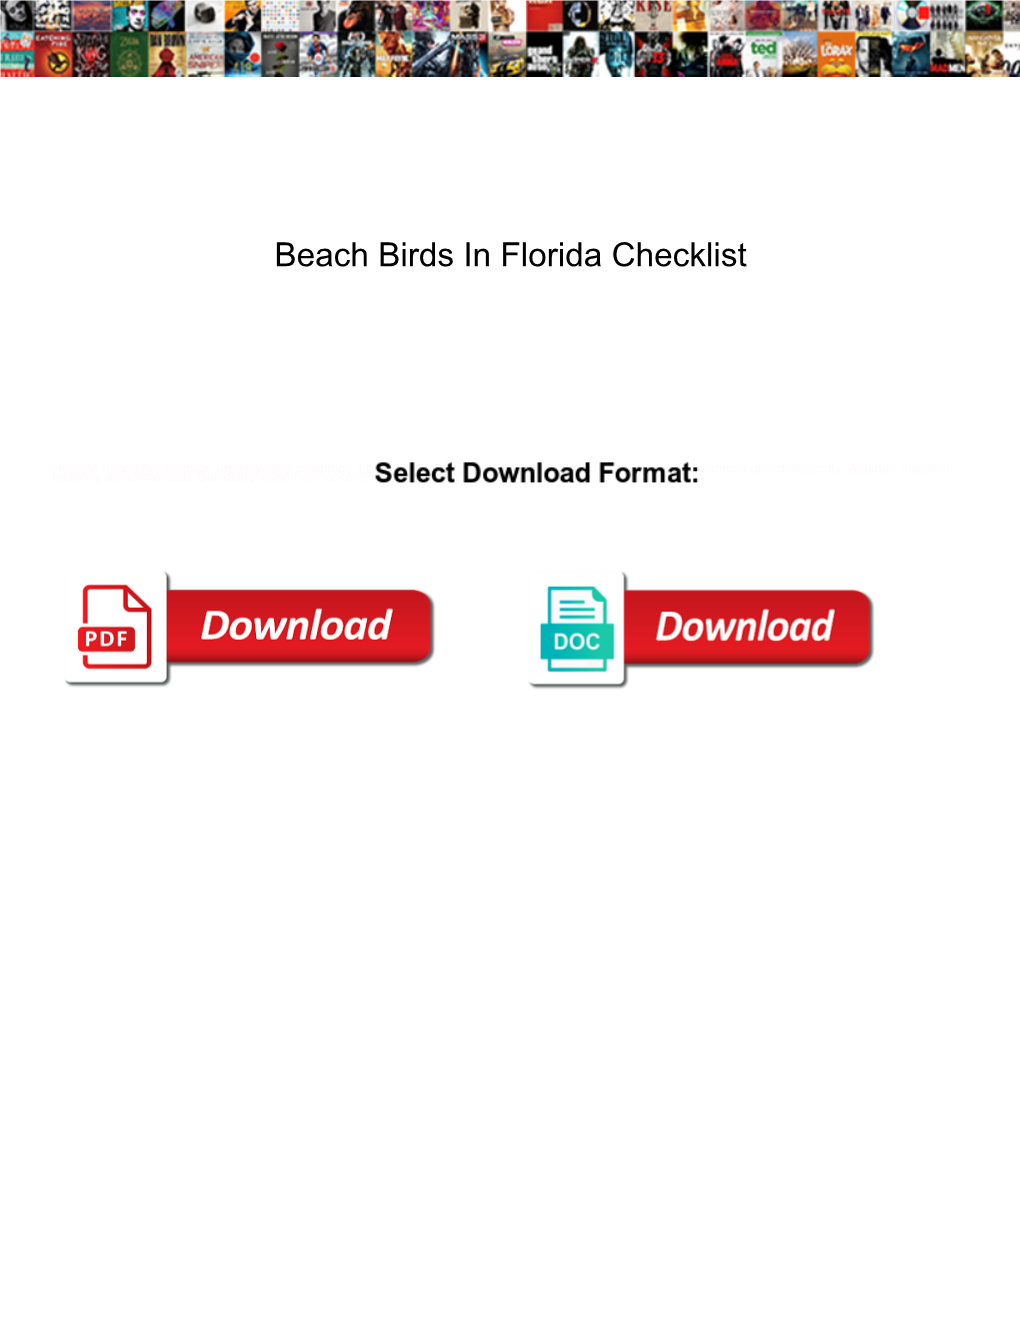 Beach Birds in Florida Checklist